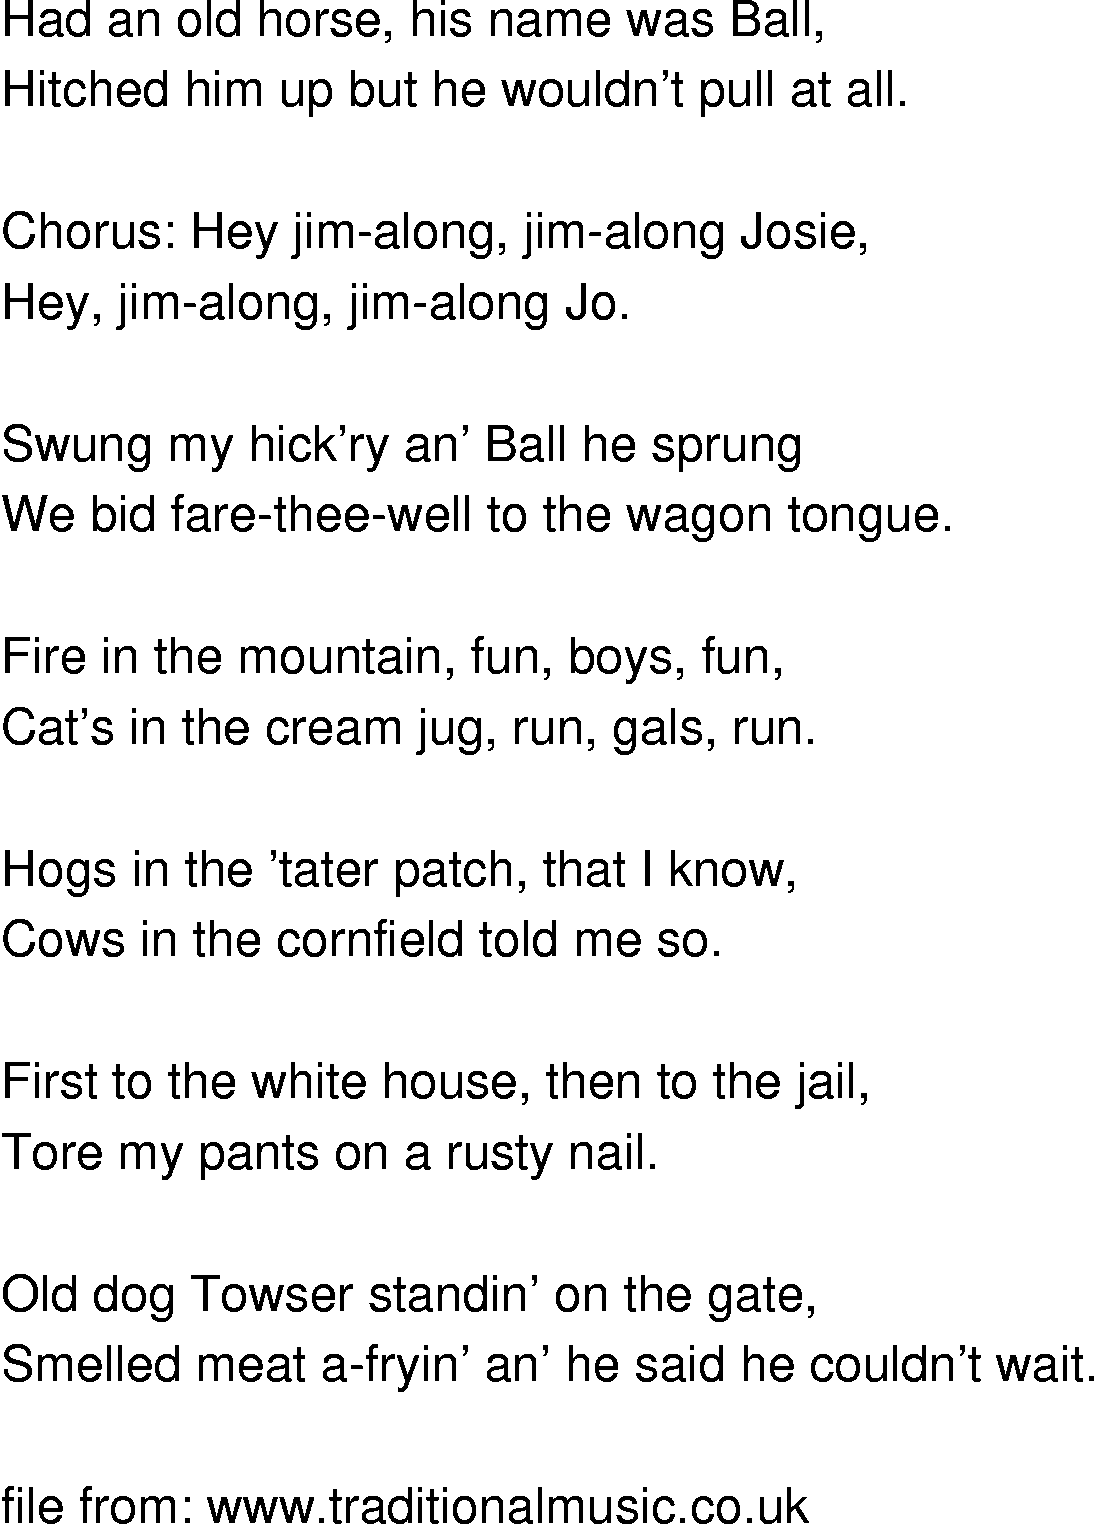 Old-Time (oldtimey) Song Lyrics - jim along josey